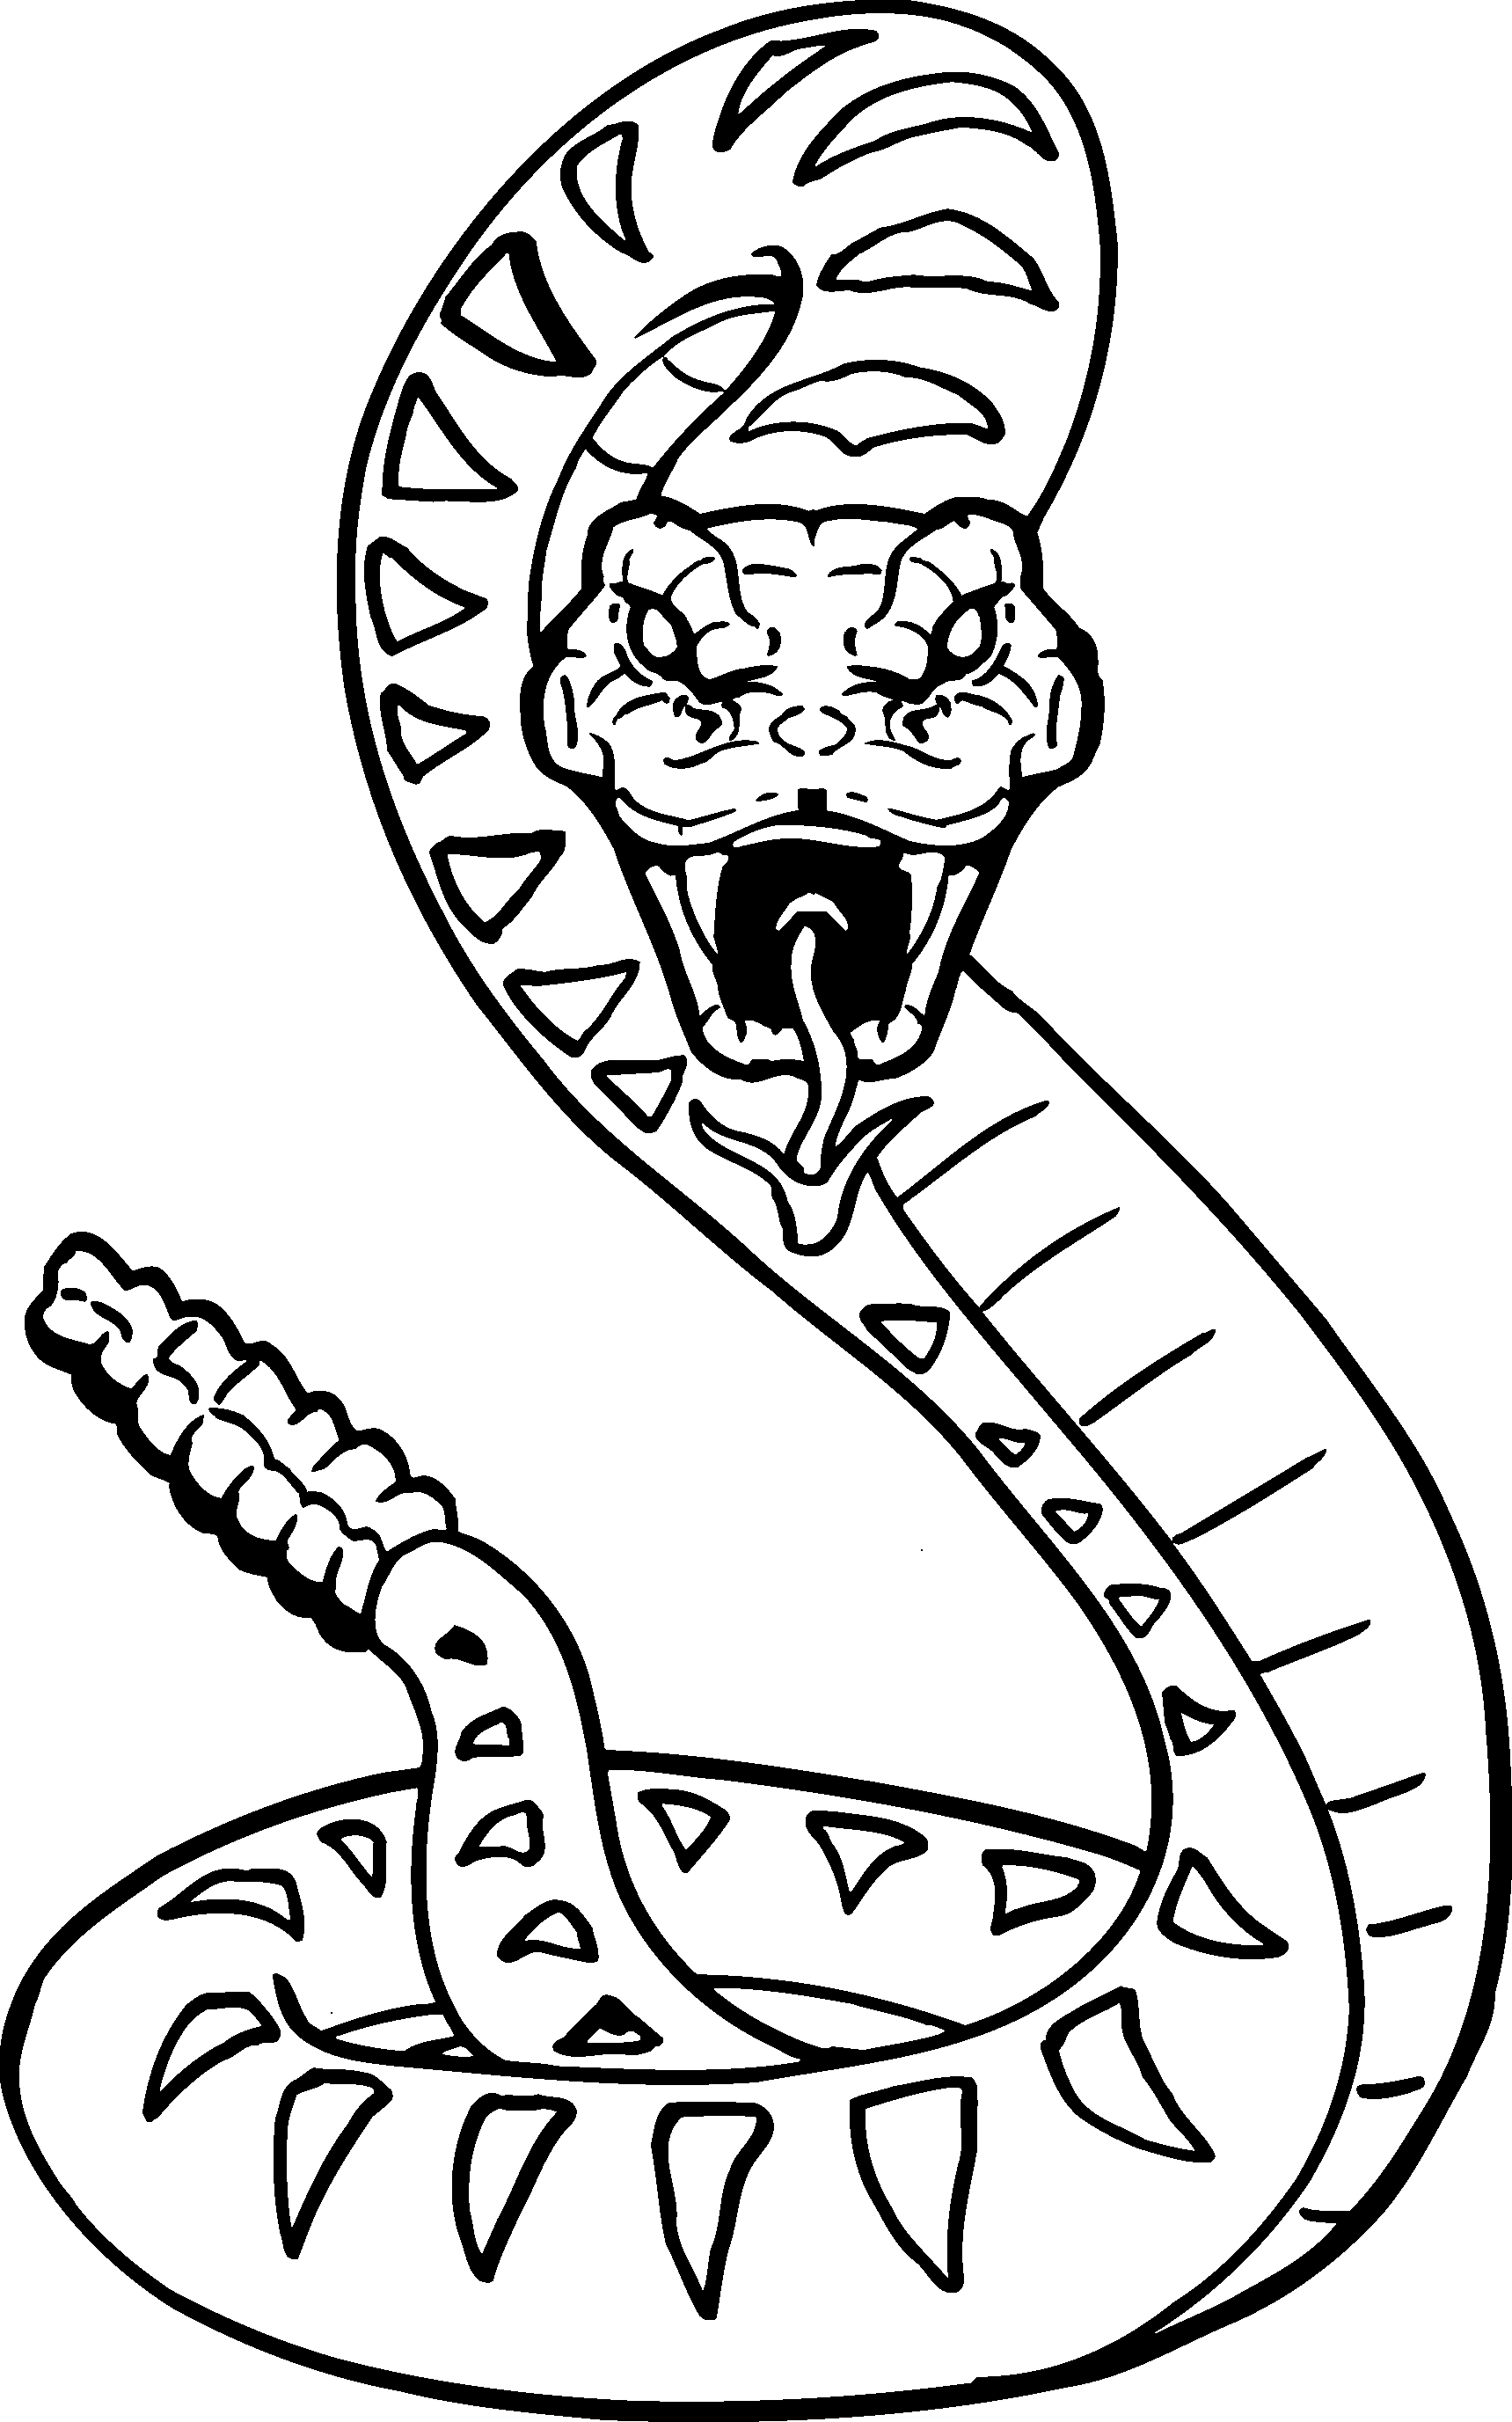 Drawing Image Of Snake